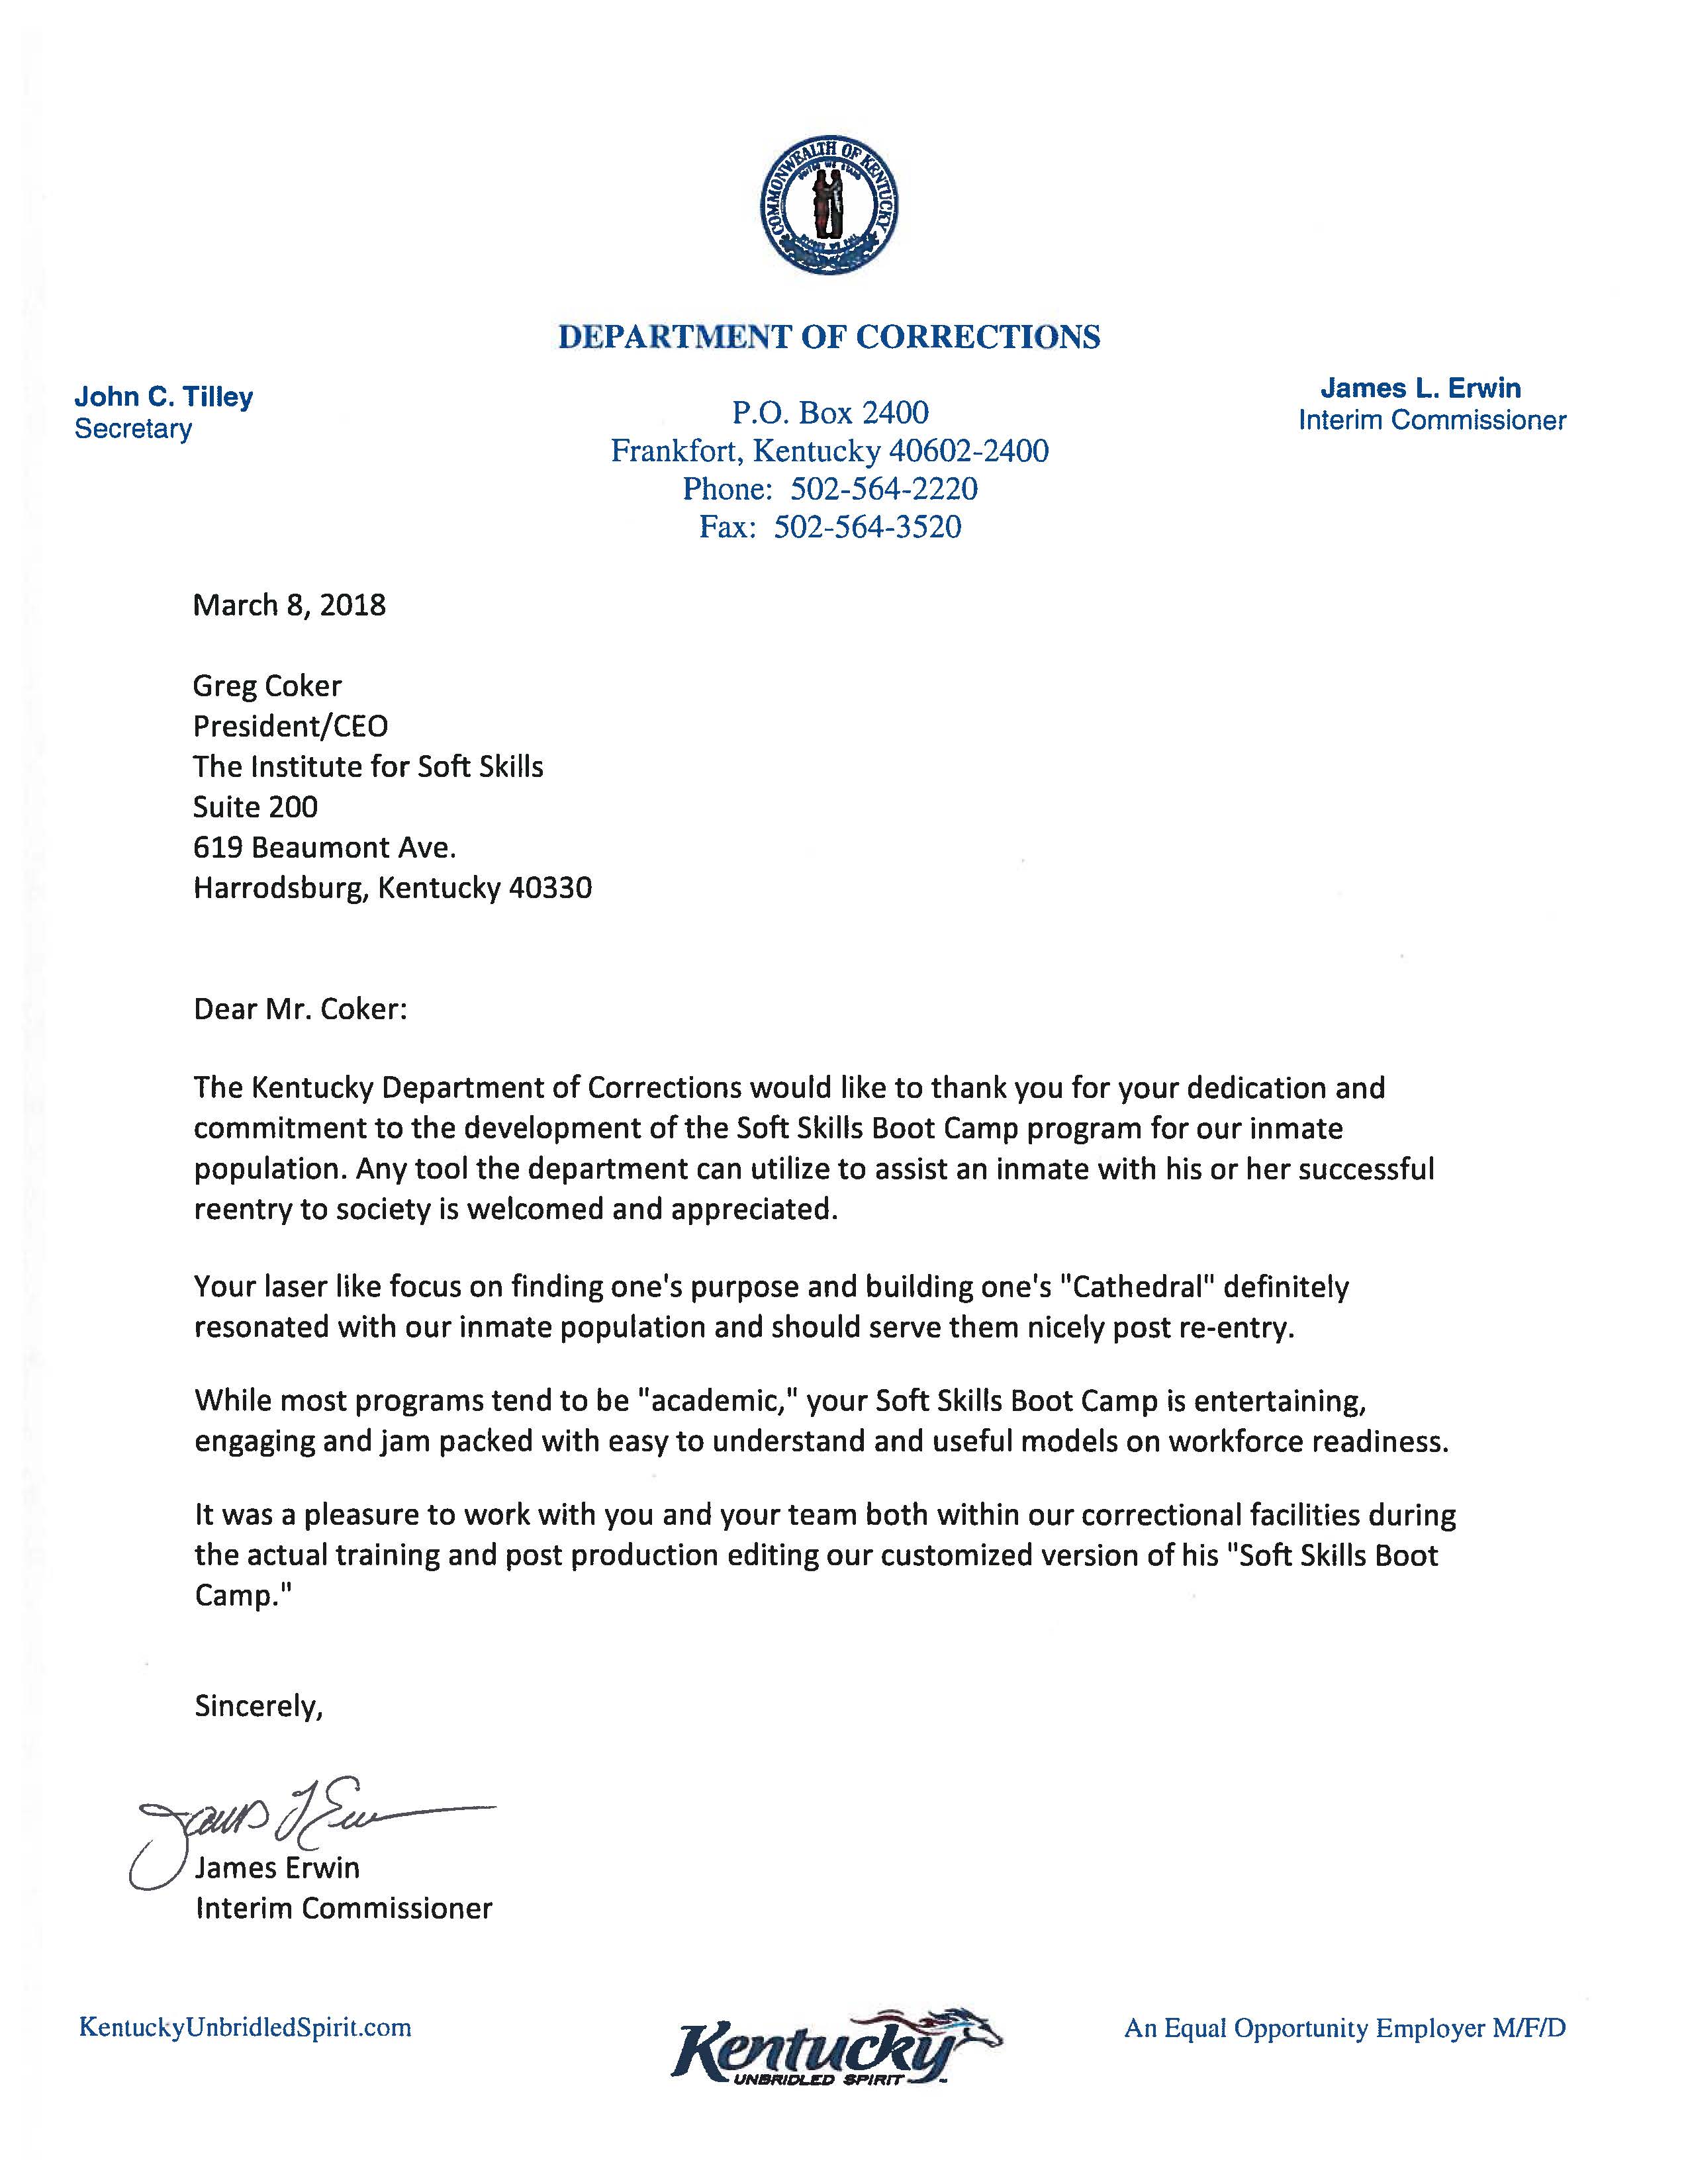 Commissioner Erwin Letter